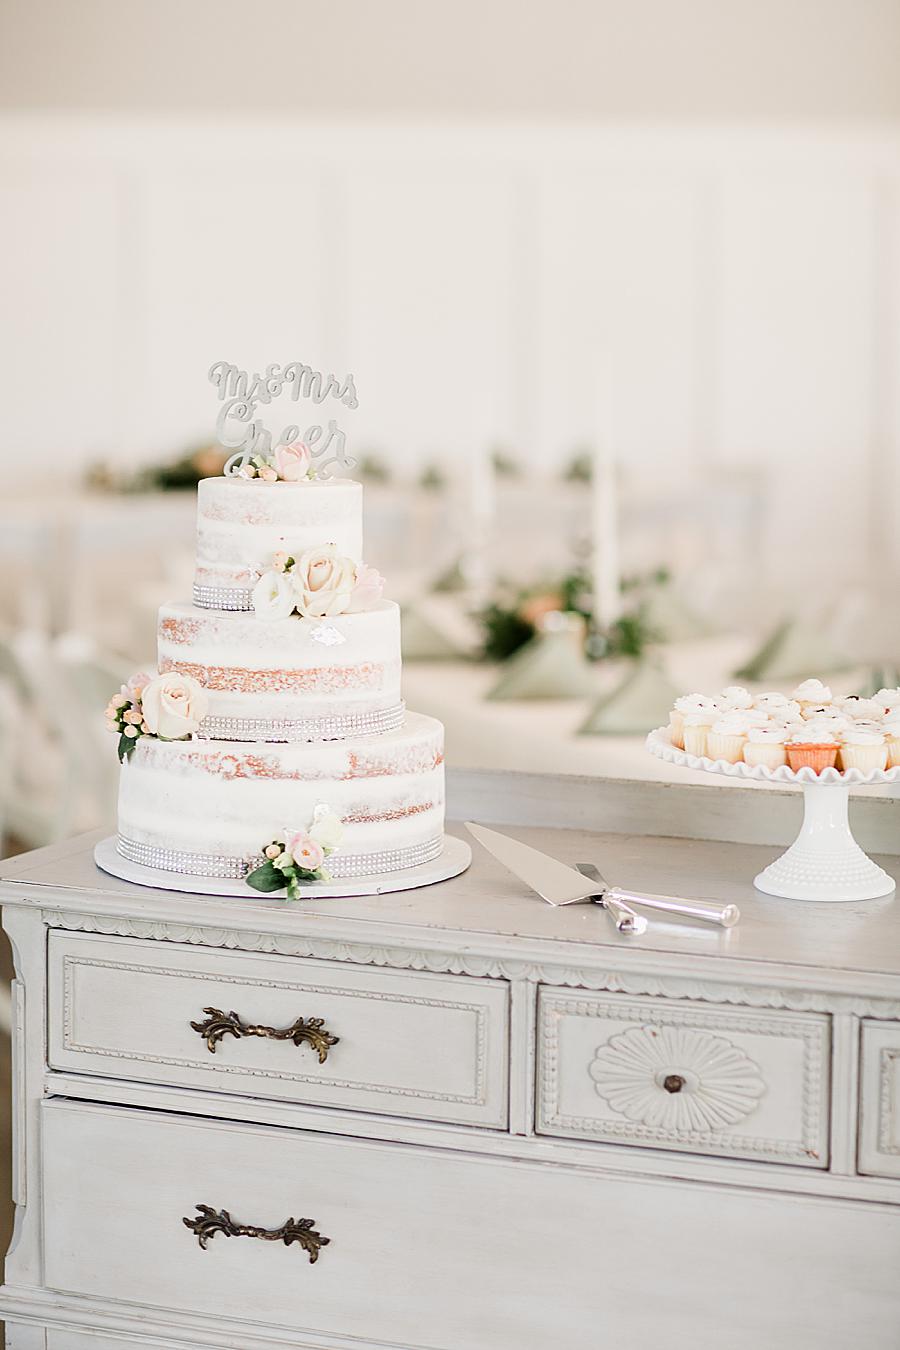 Cake setup at this pavilion wedding by Knoxville Wedding Photographer, Amanda May Photos.